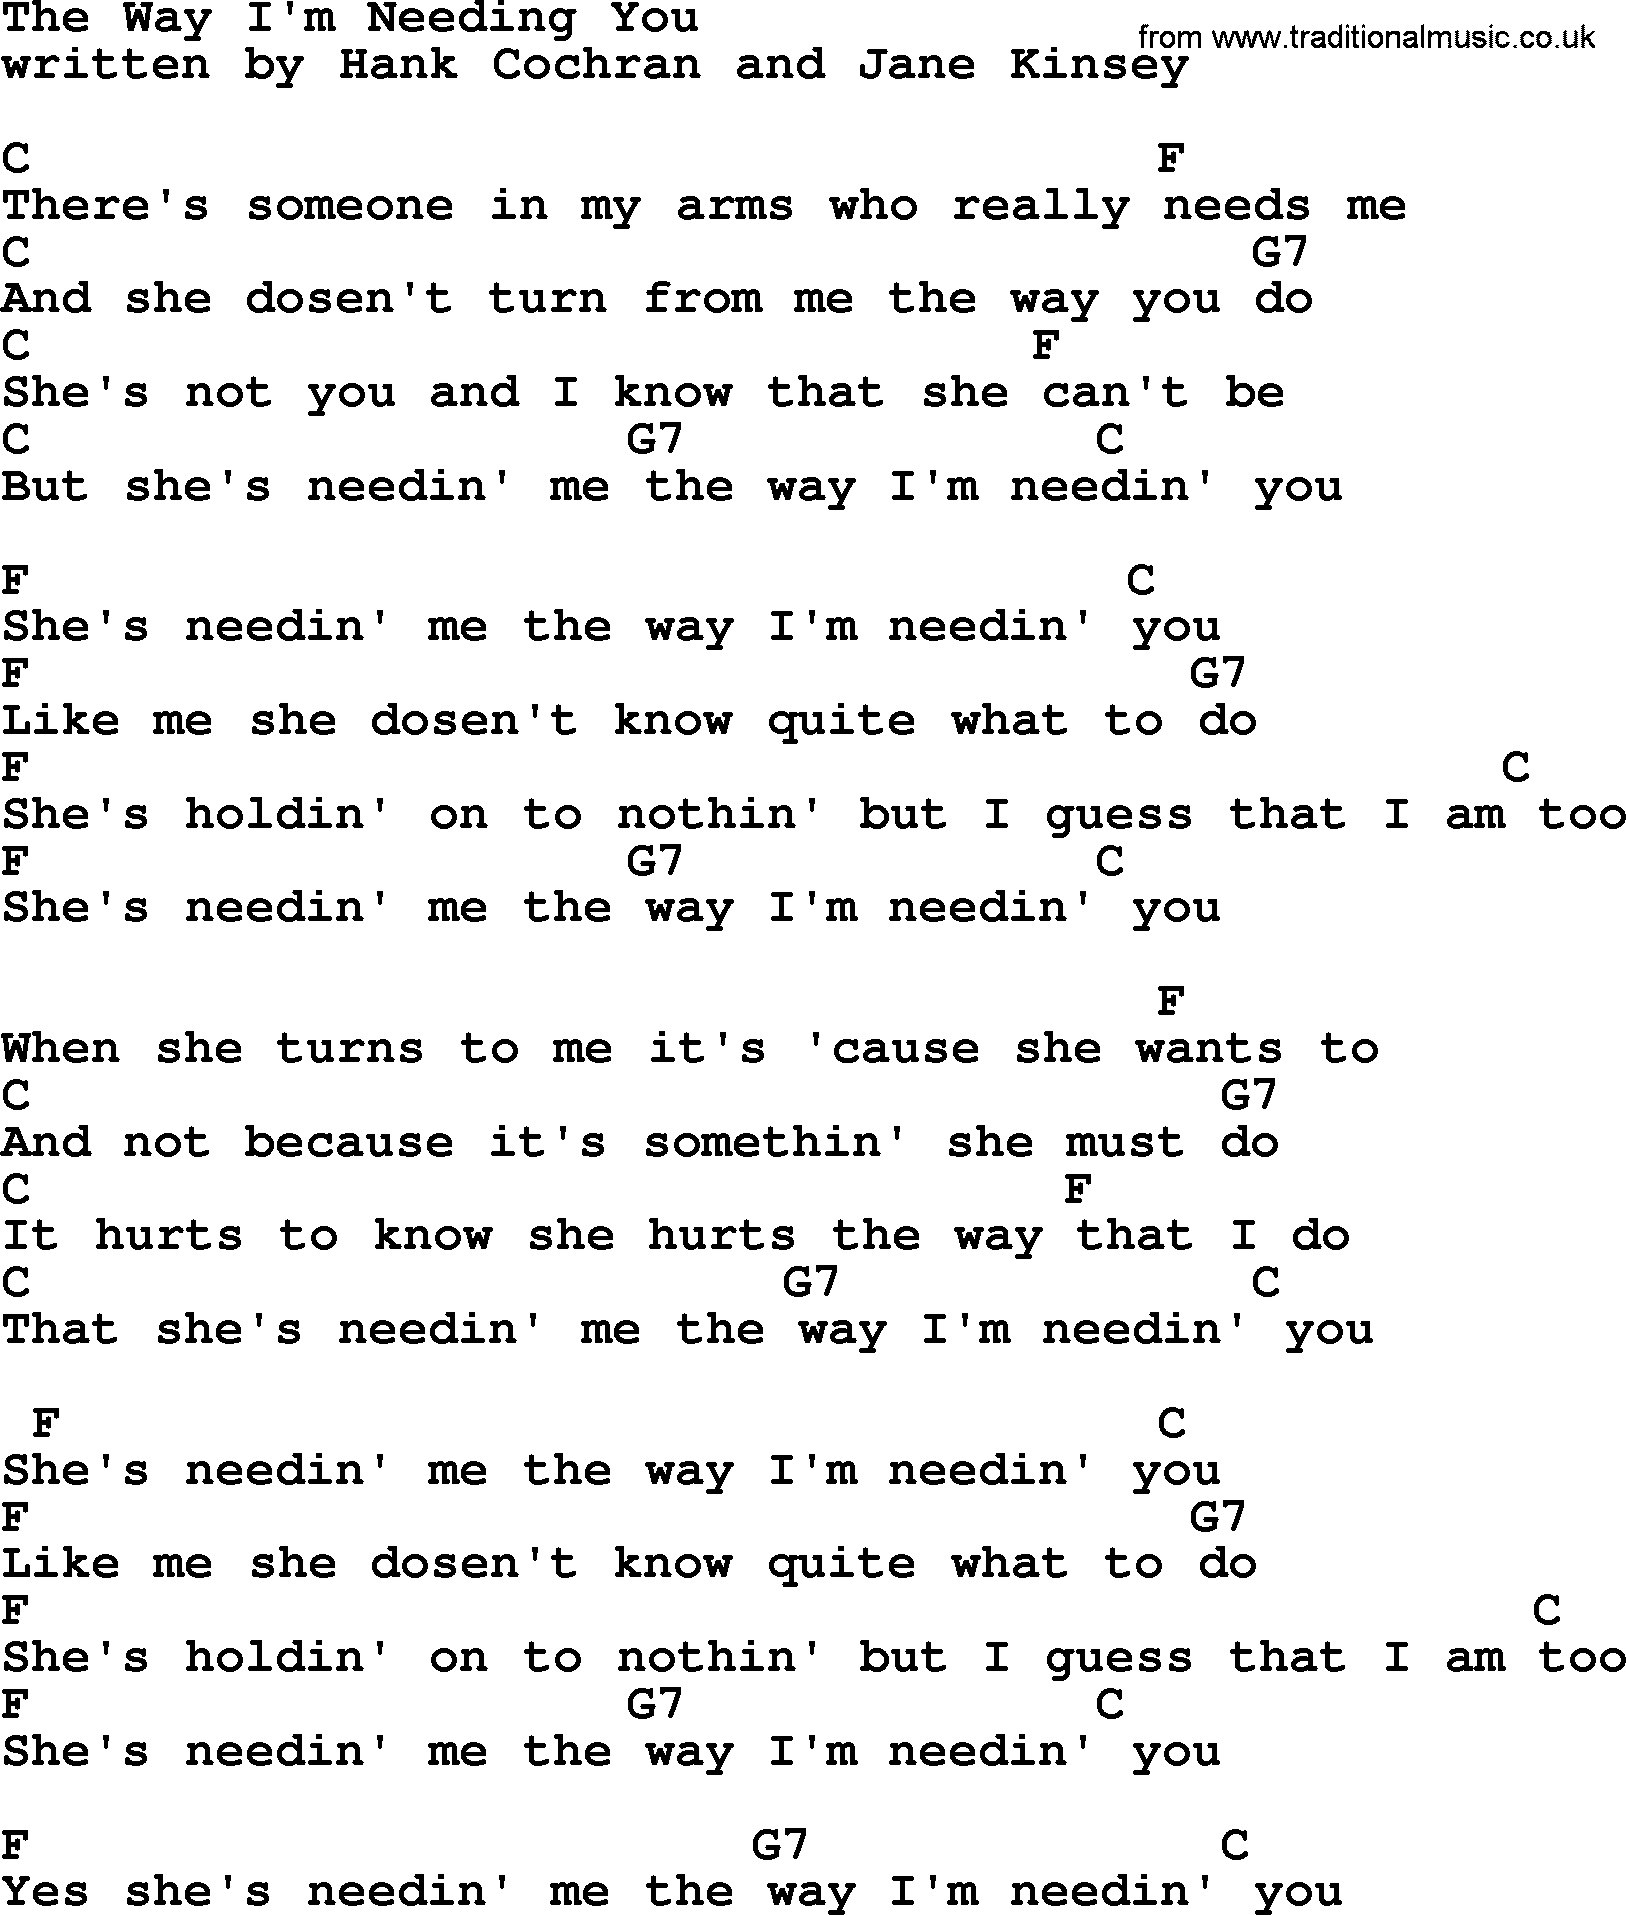 Marty Robbins song: The Way I'm Needing You, lyrics and chords